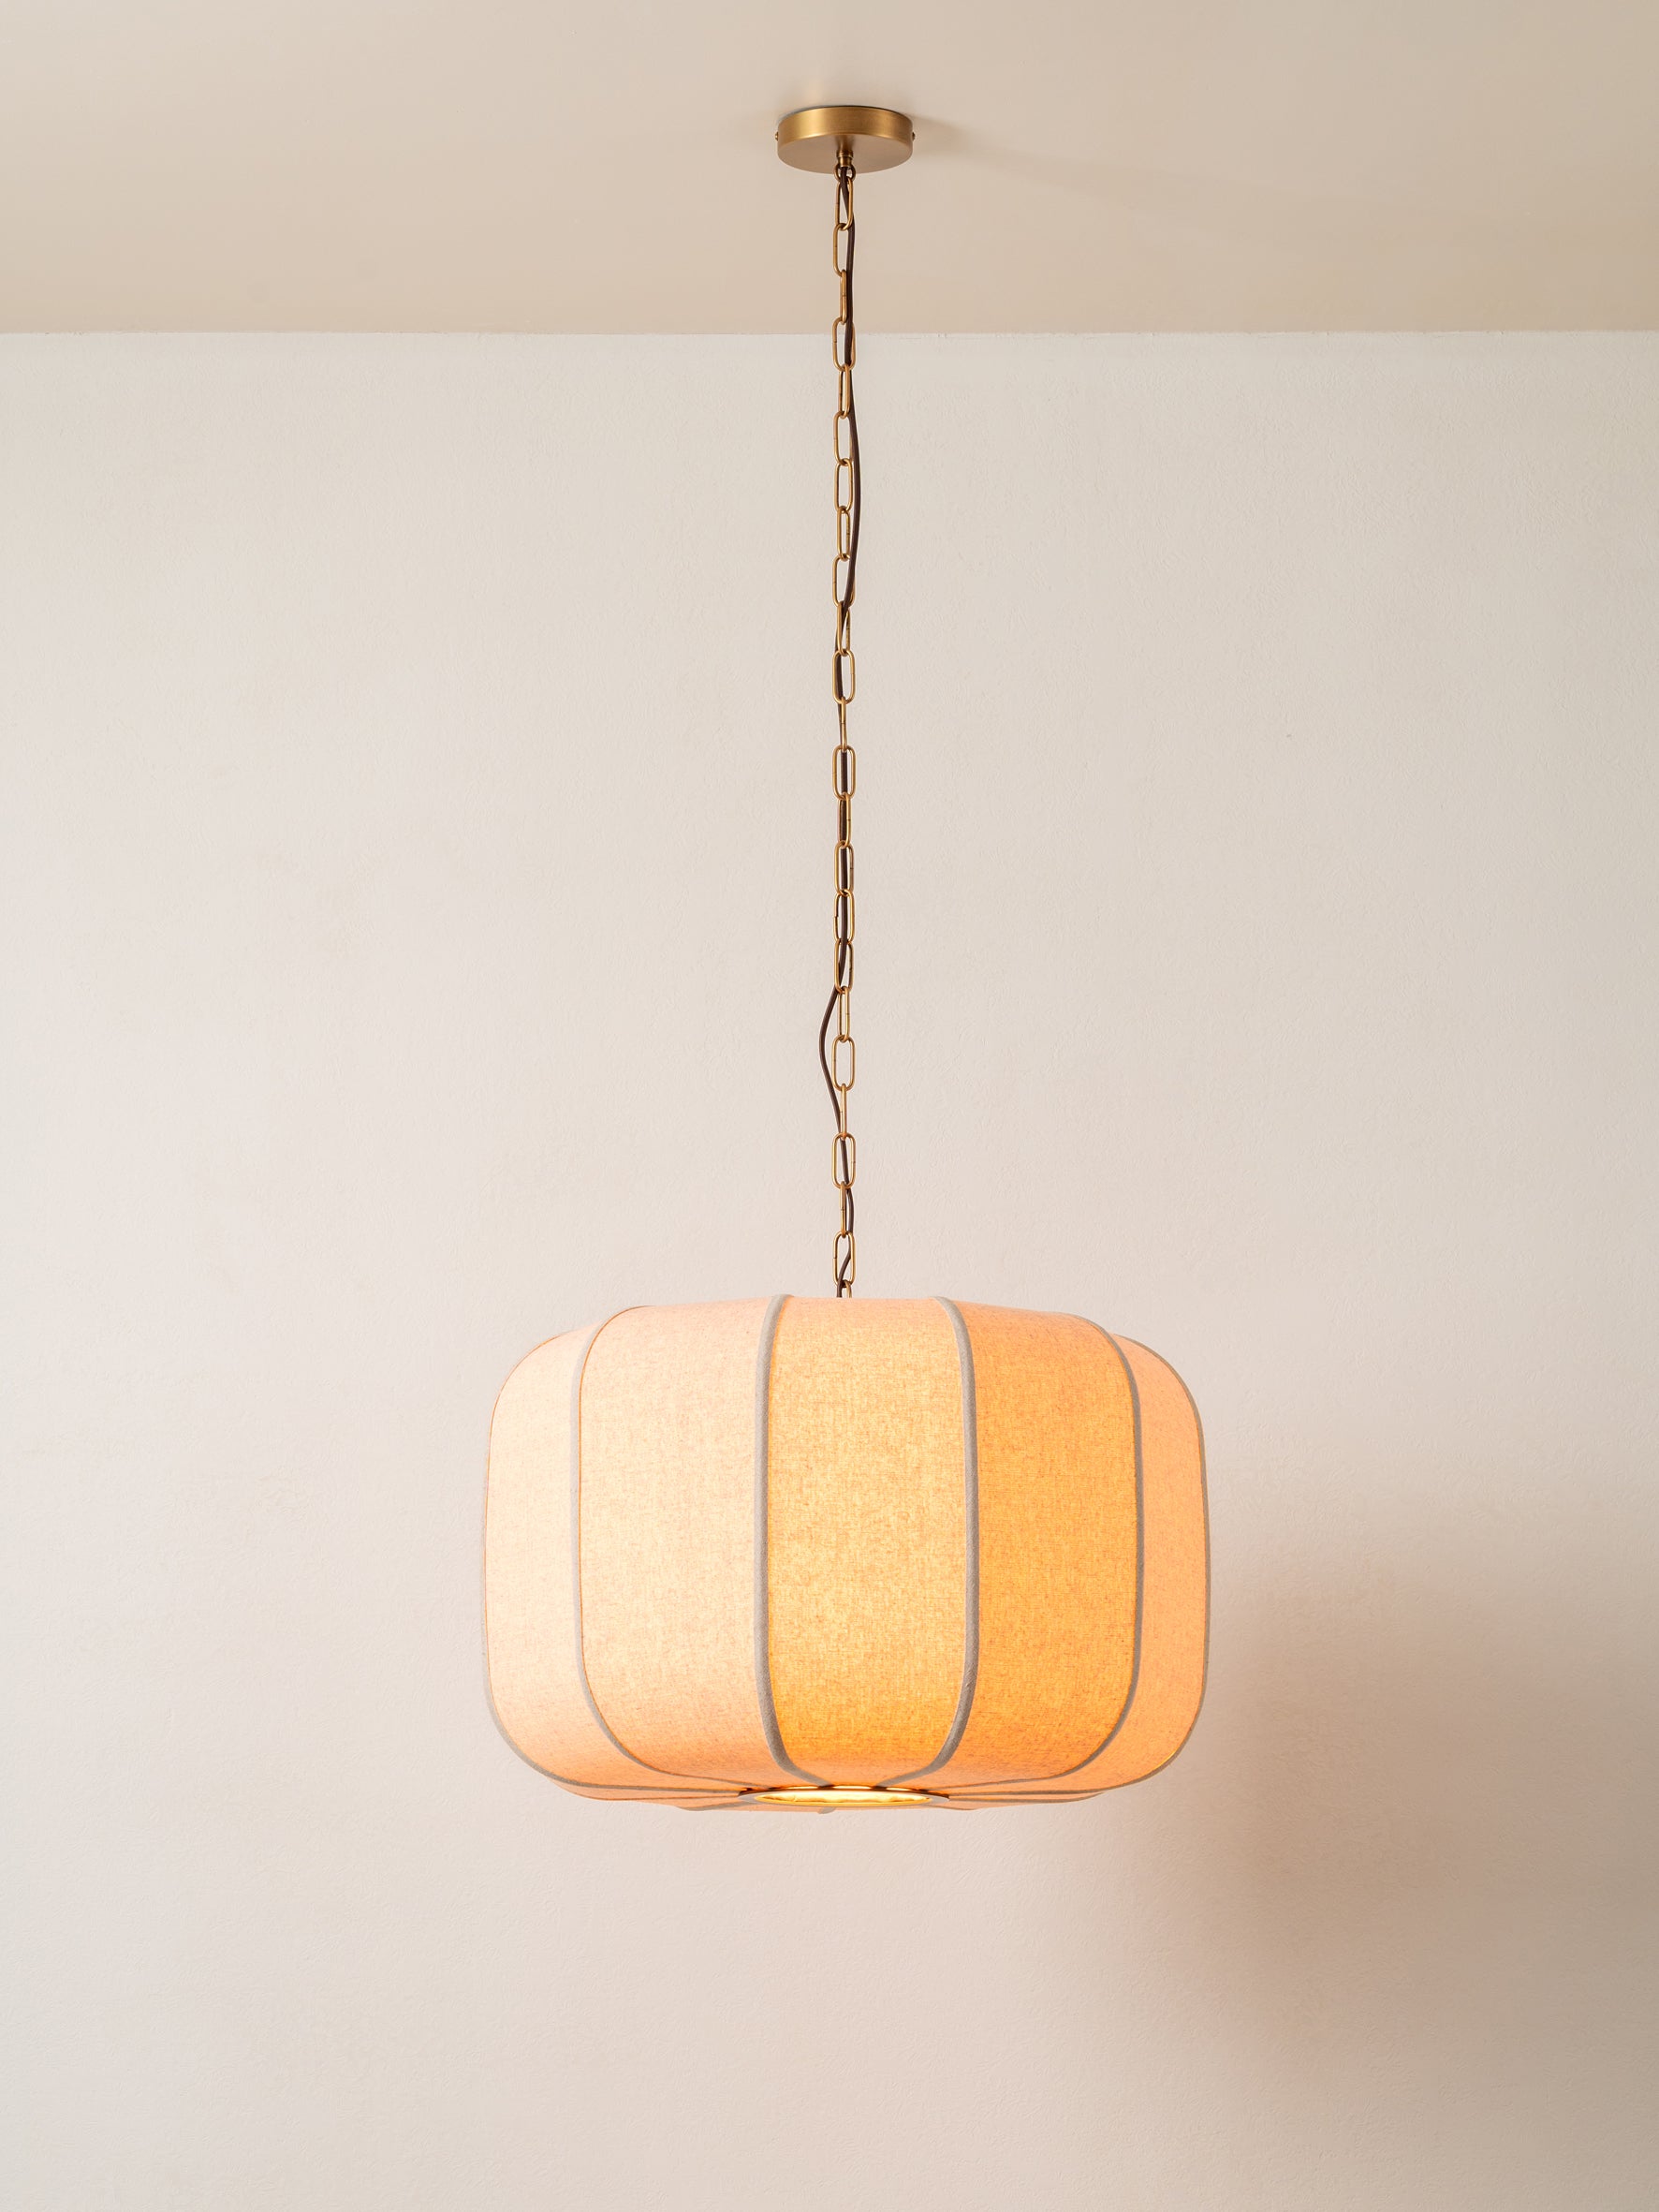 Ottino - aged brass and linen ceiling pendant | Ceiling lights | lights&lamps | UK | Modern Affordable Designer Lighting